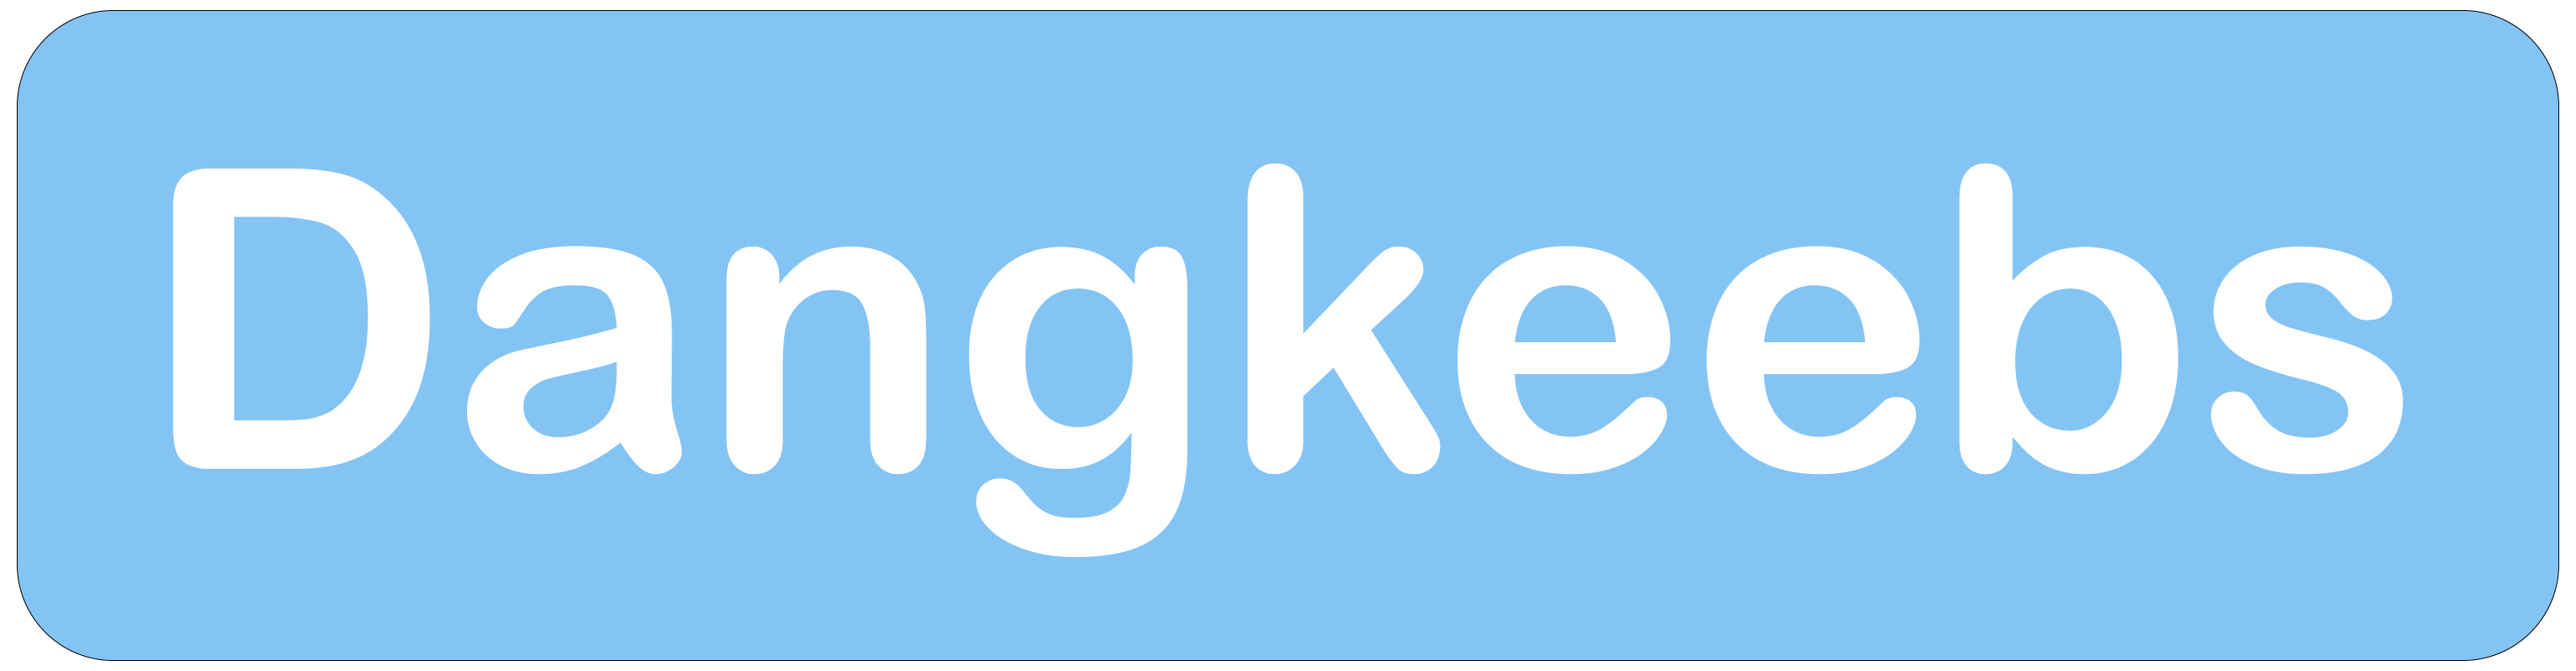 Dangkeebs logo